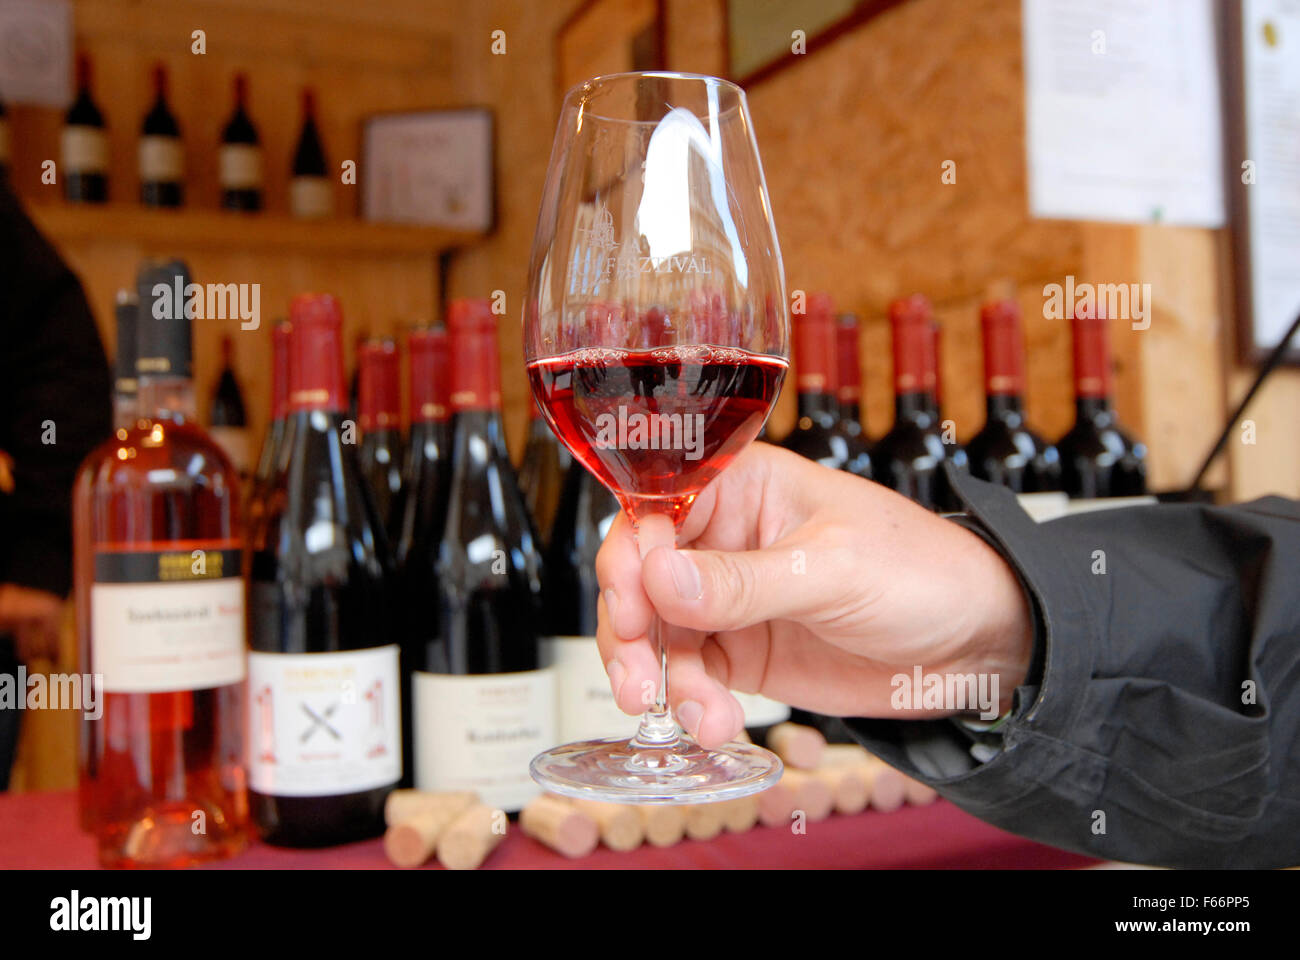 Wine festival, red wine, Budapest, Hungary Stock Photo